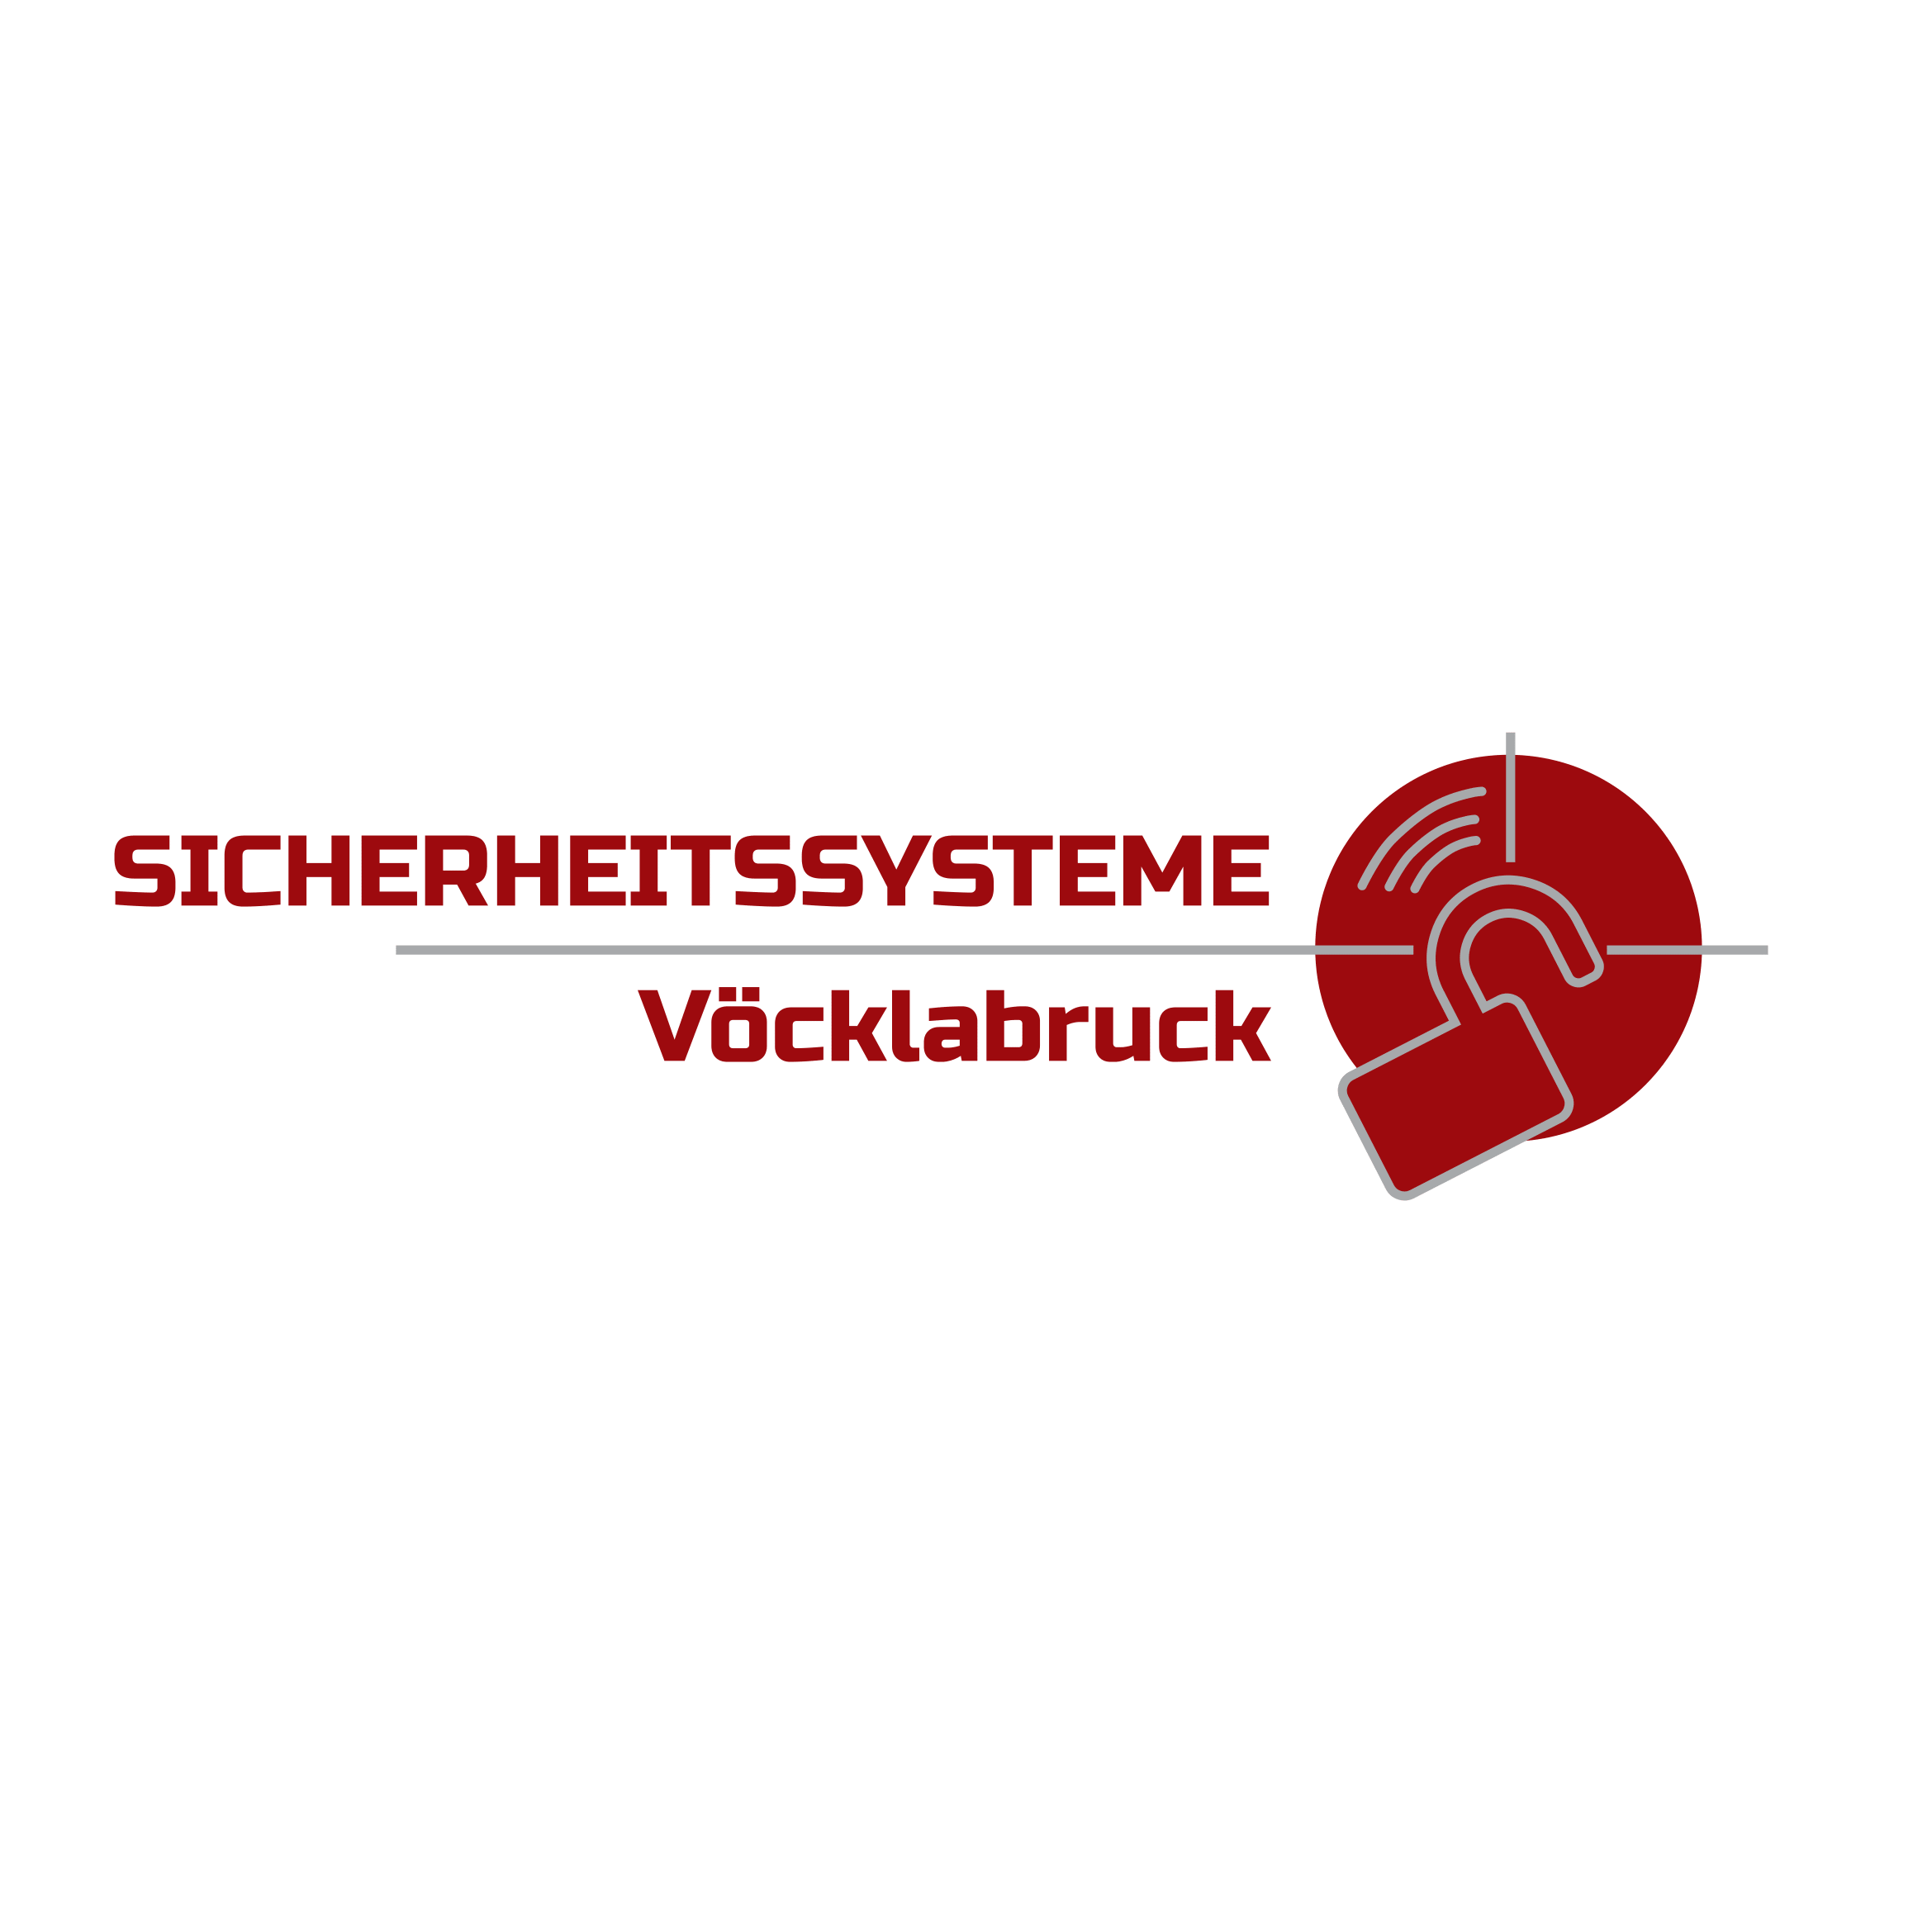 Sicherheitssysteme Vöcklabruck GmbH 4840 Vöcklabruck